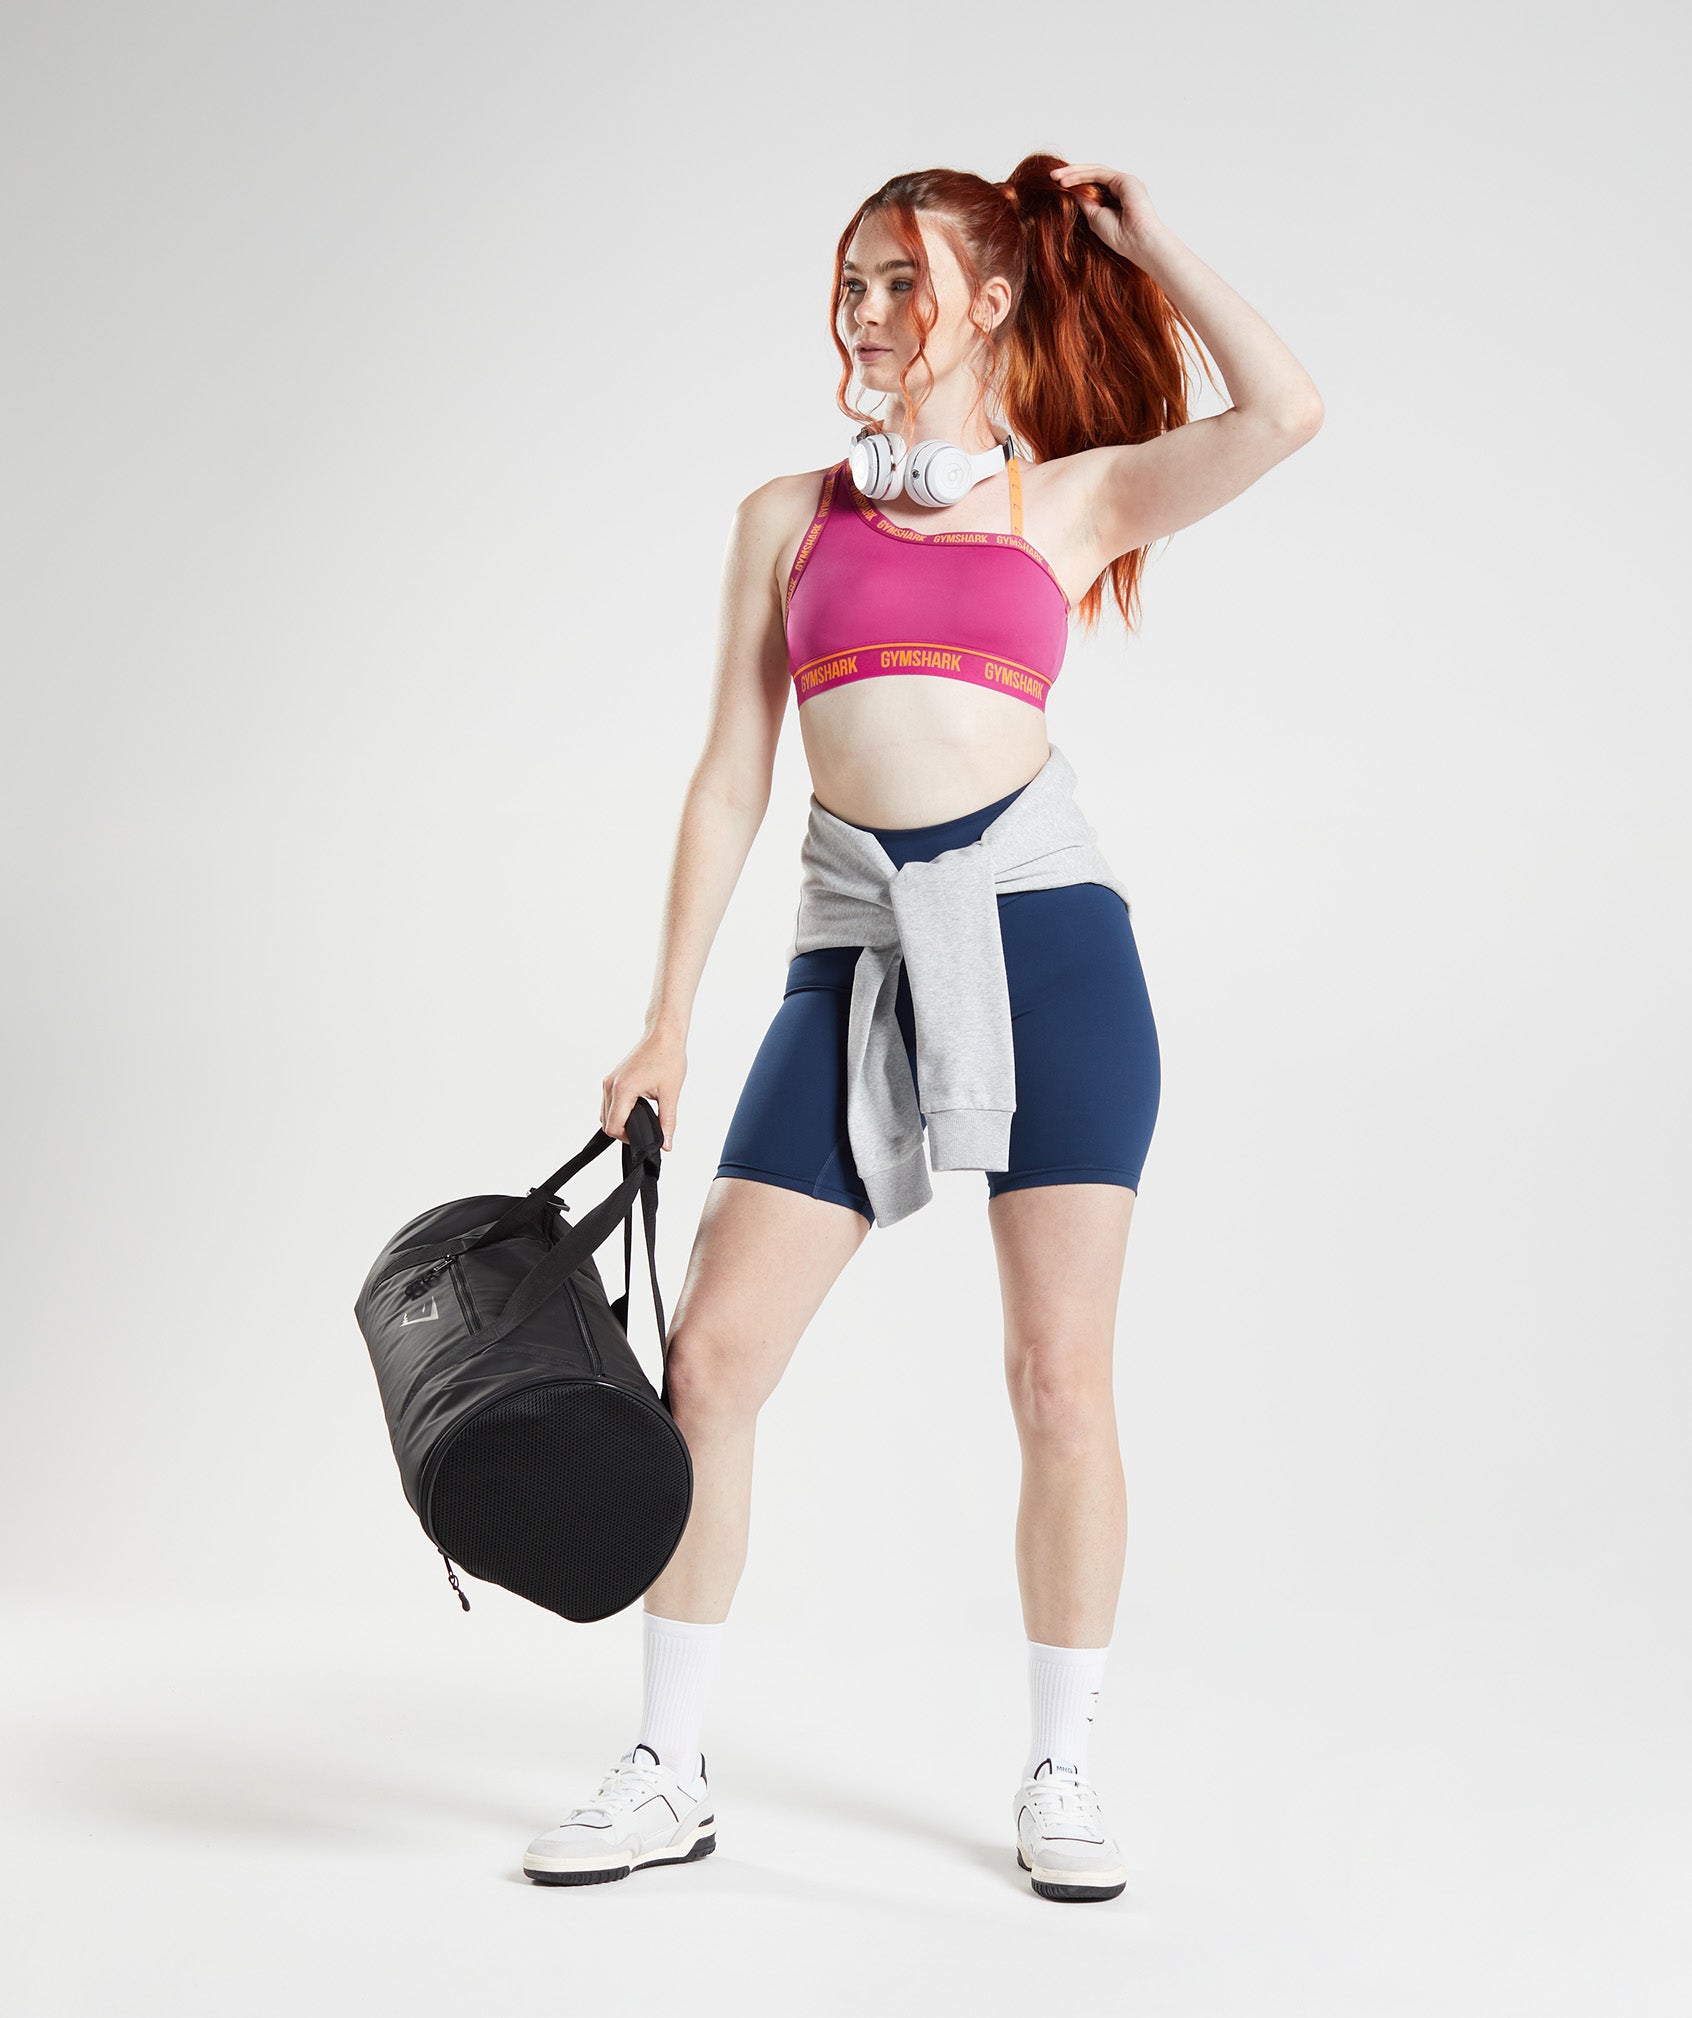 Koral Womens Rocket Energy Fitness Workout Sports Bra sz. S NWOT Black/Pink